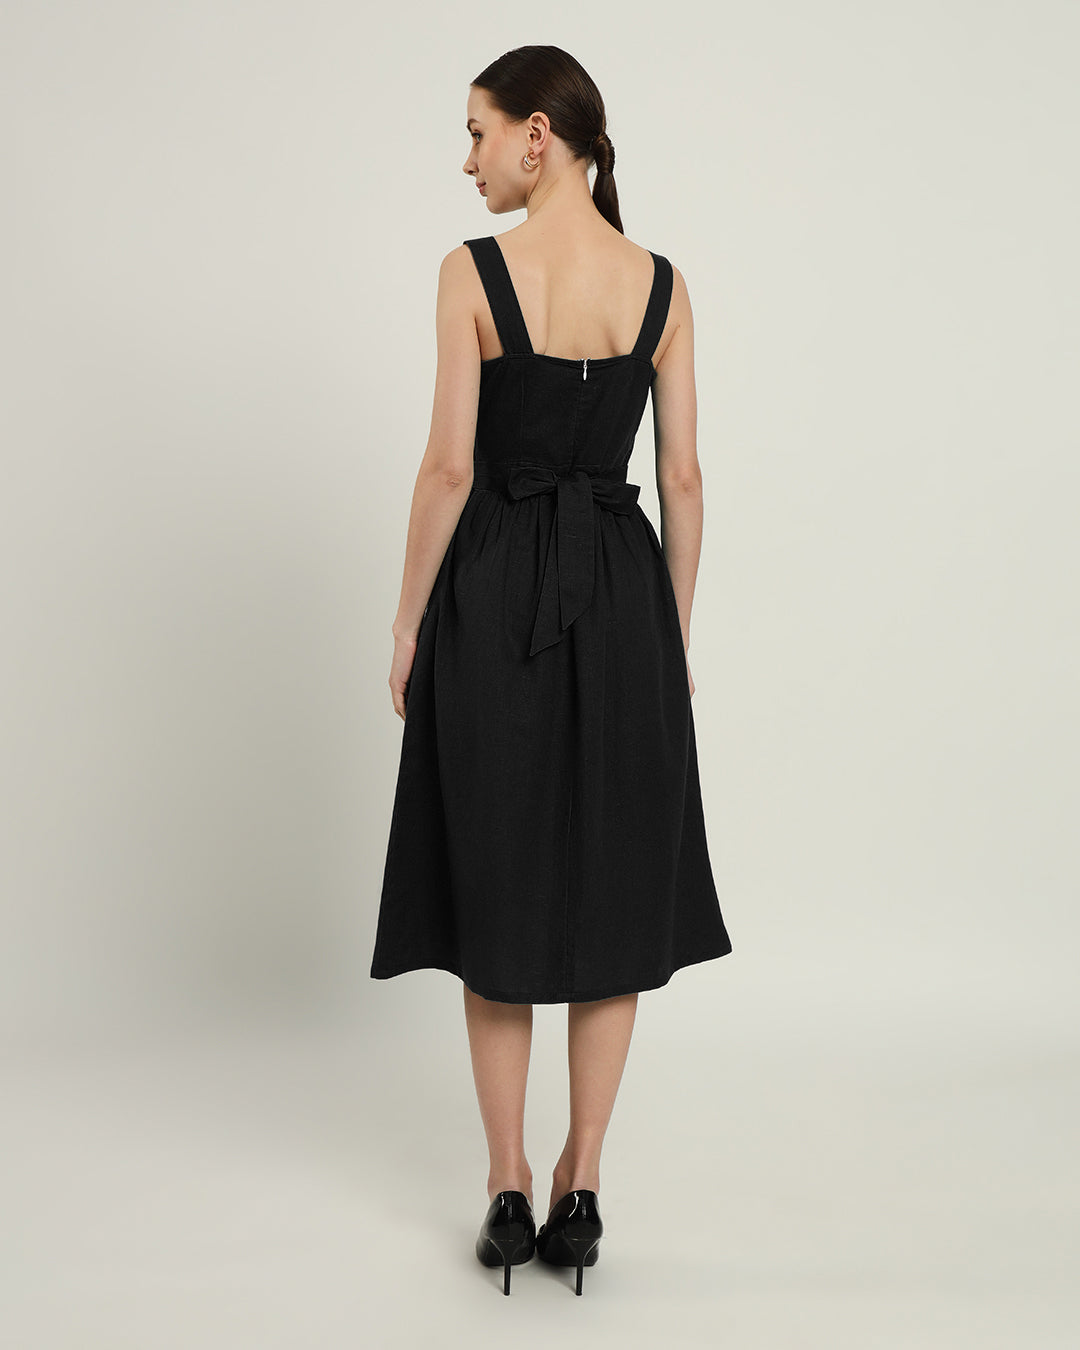 The Mihara Daisy Noir Linen Dress